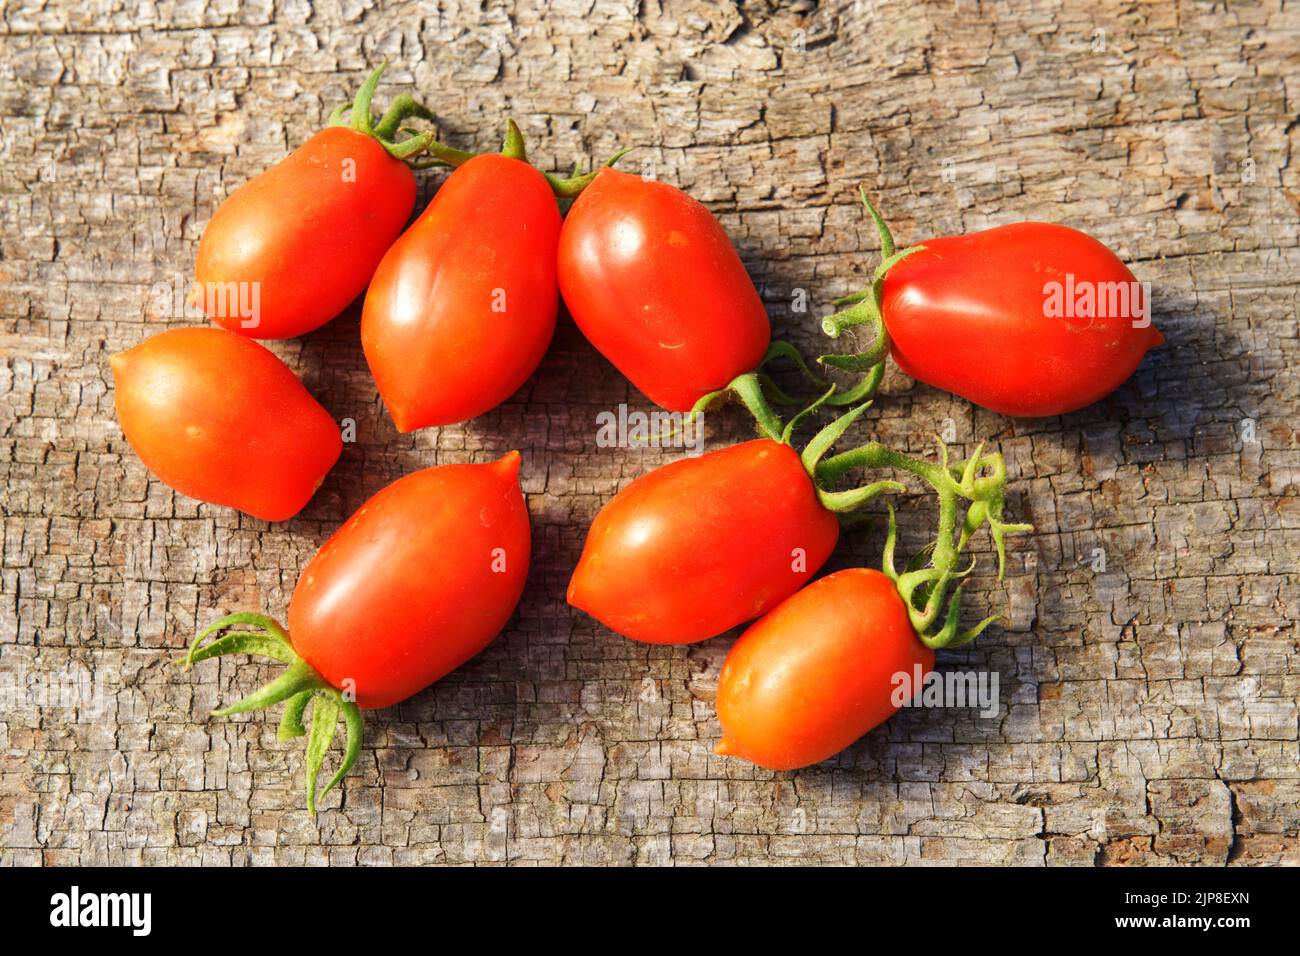 Vegetable garden tomatoes, variety : Olivette Roma tomato. Stock Photo